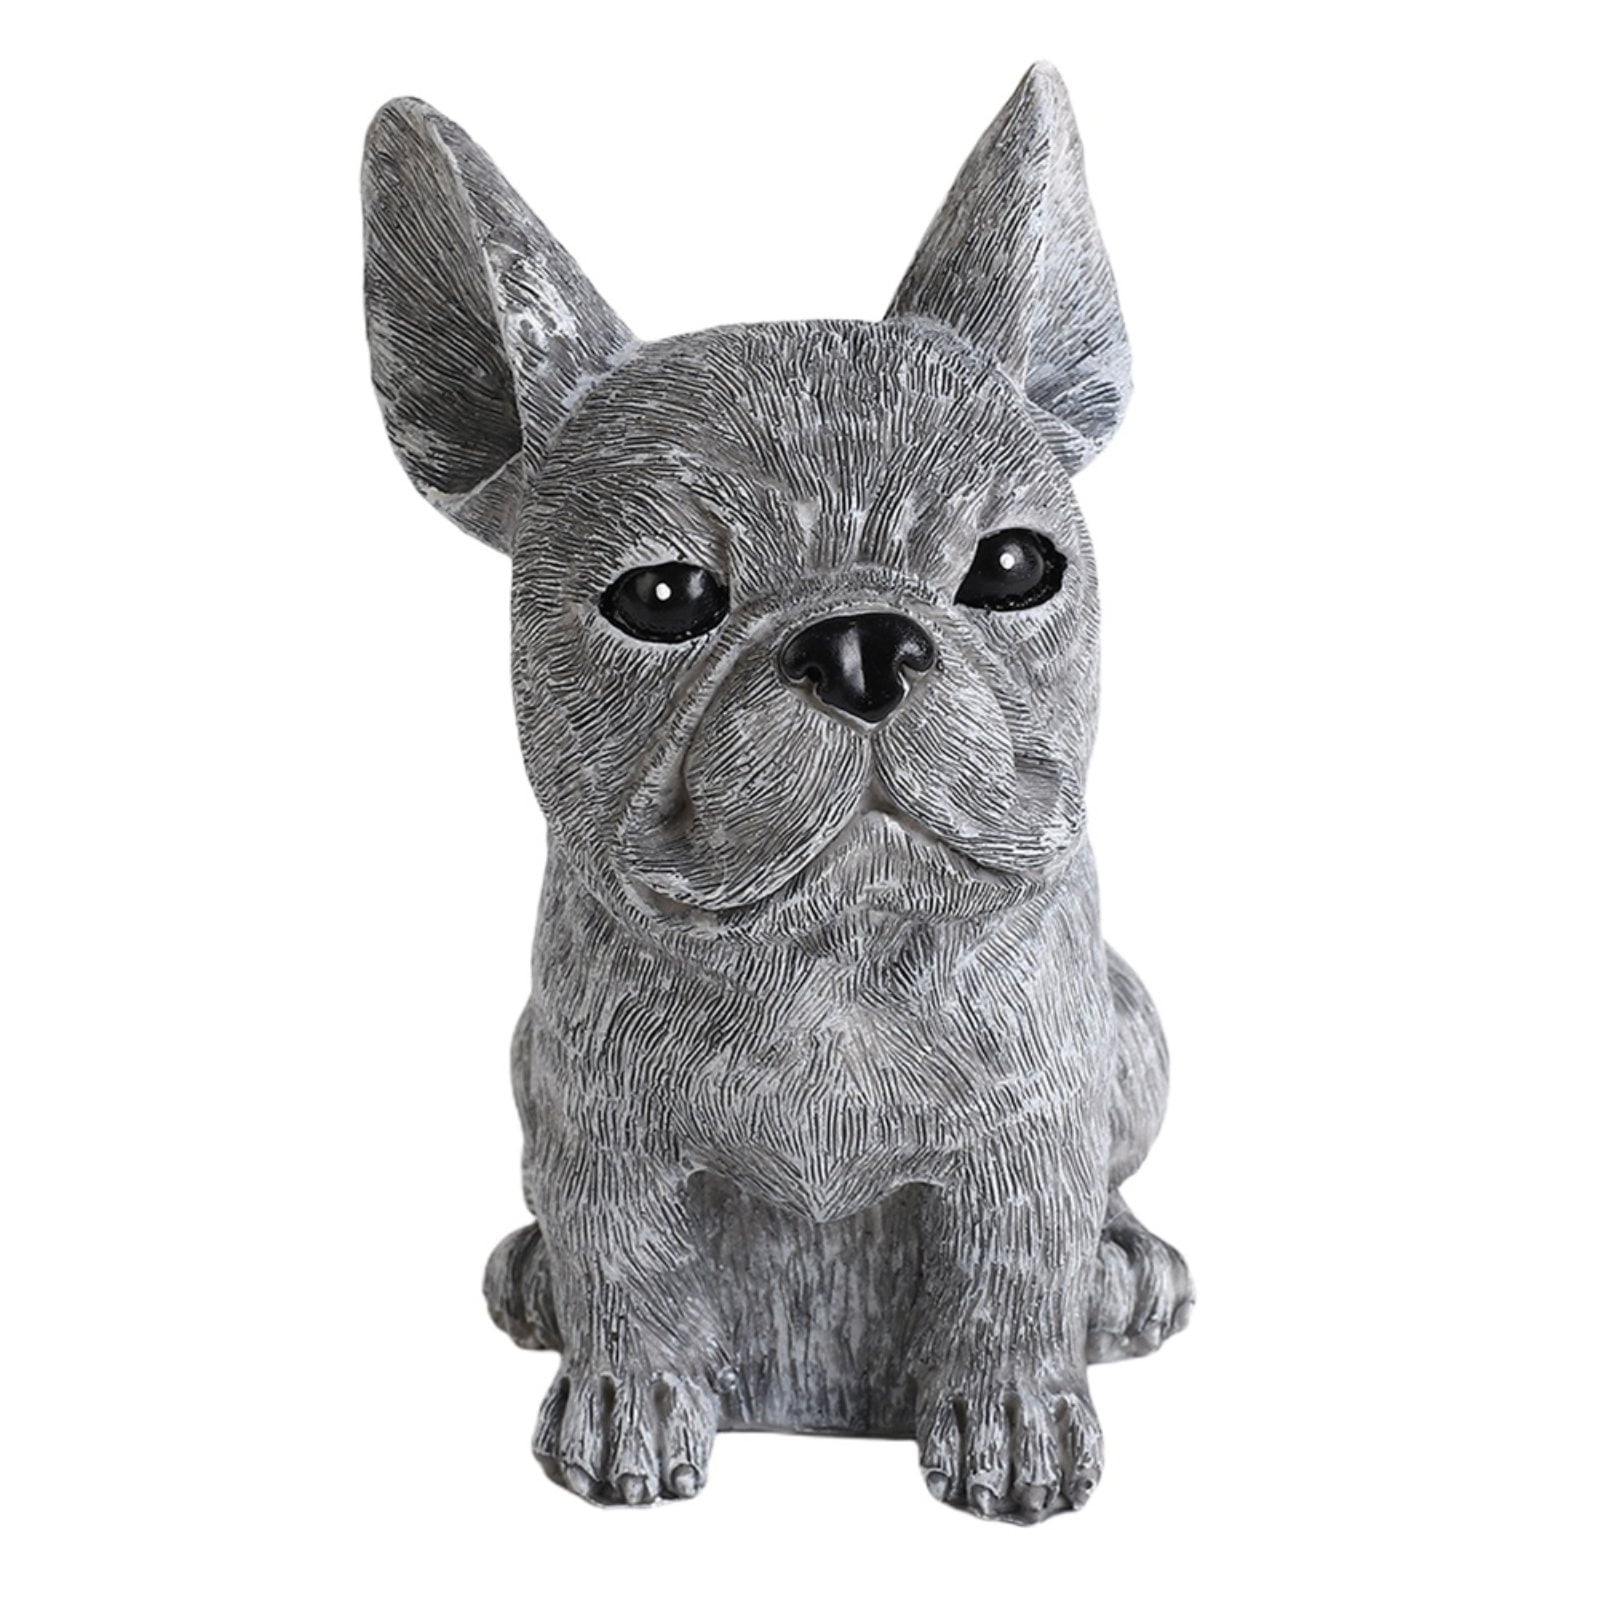 Details about   Home Decor Crafts Dog Figurine Resin Art Animal Dog Doll Sculpture Statue 